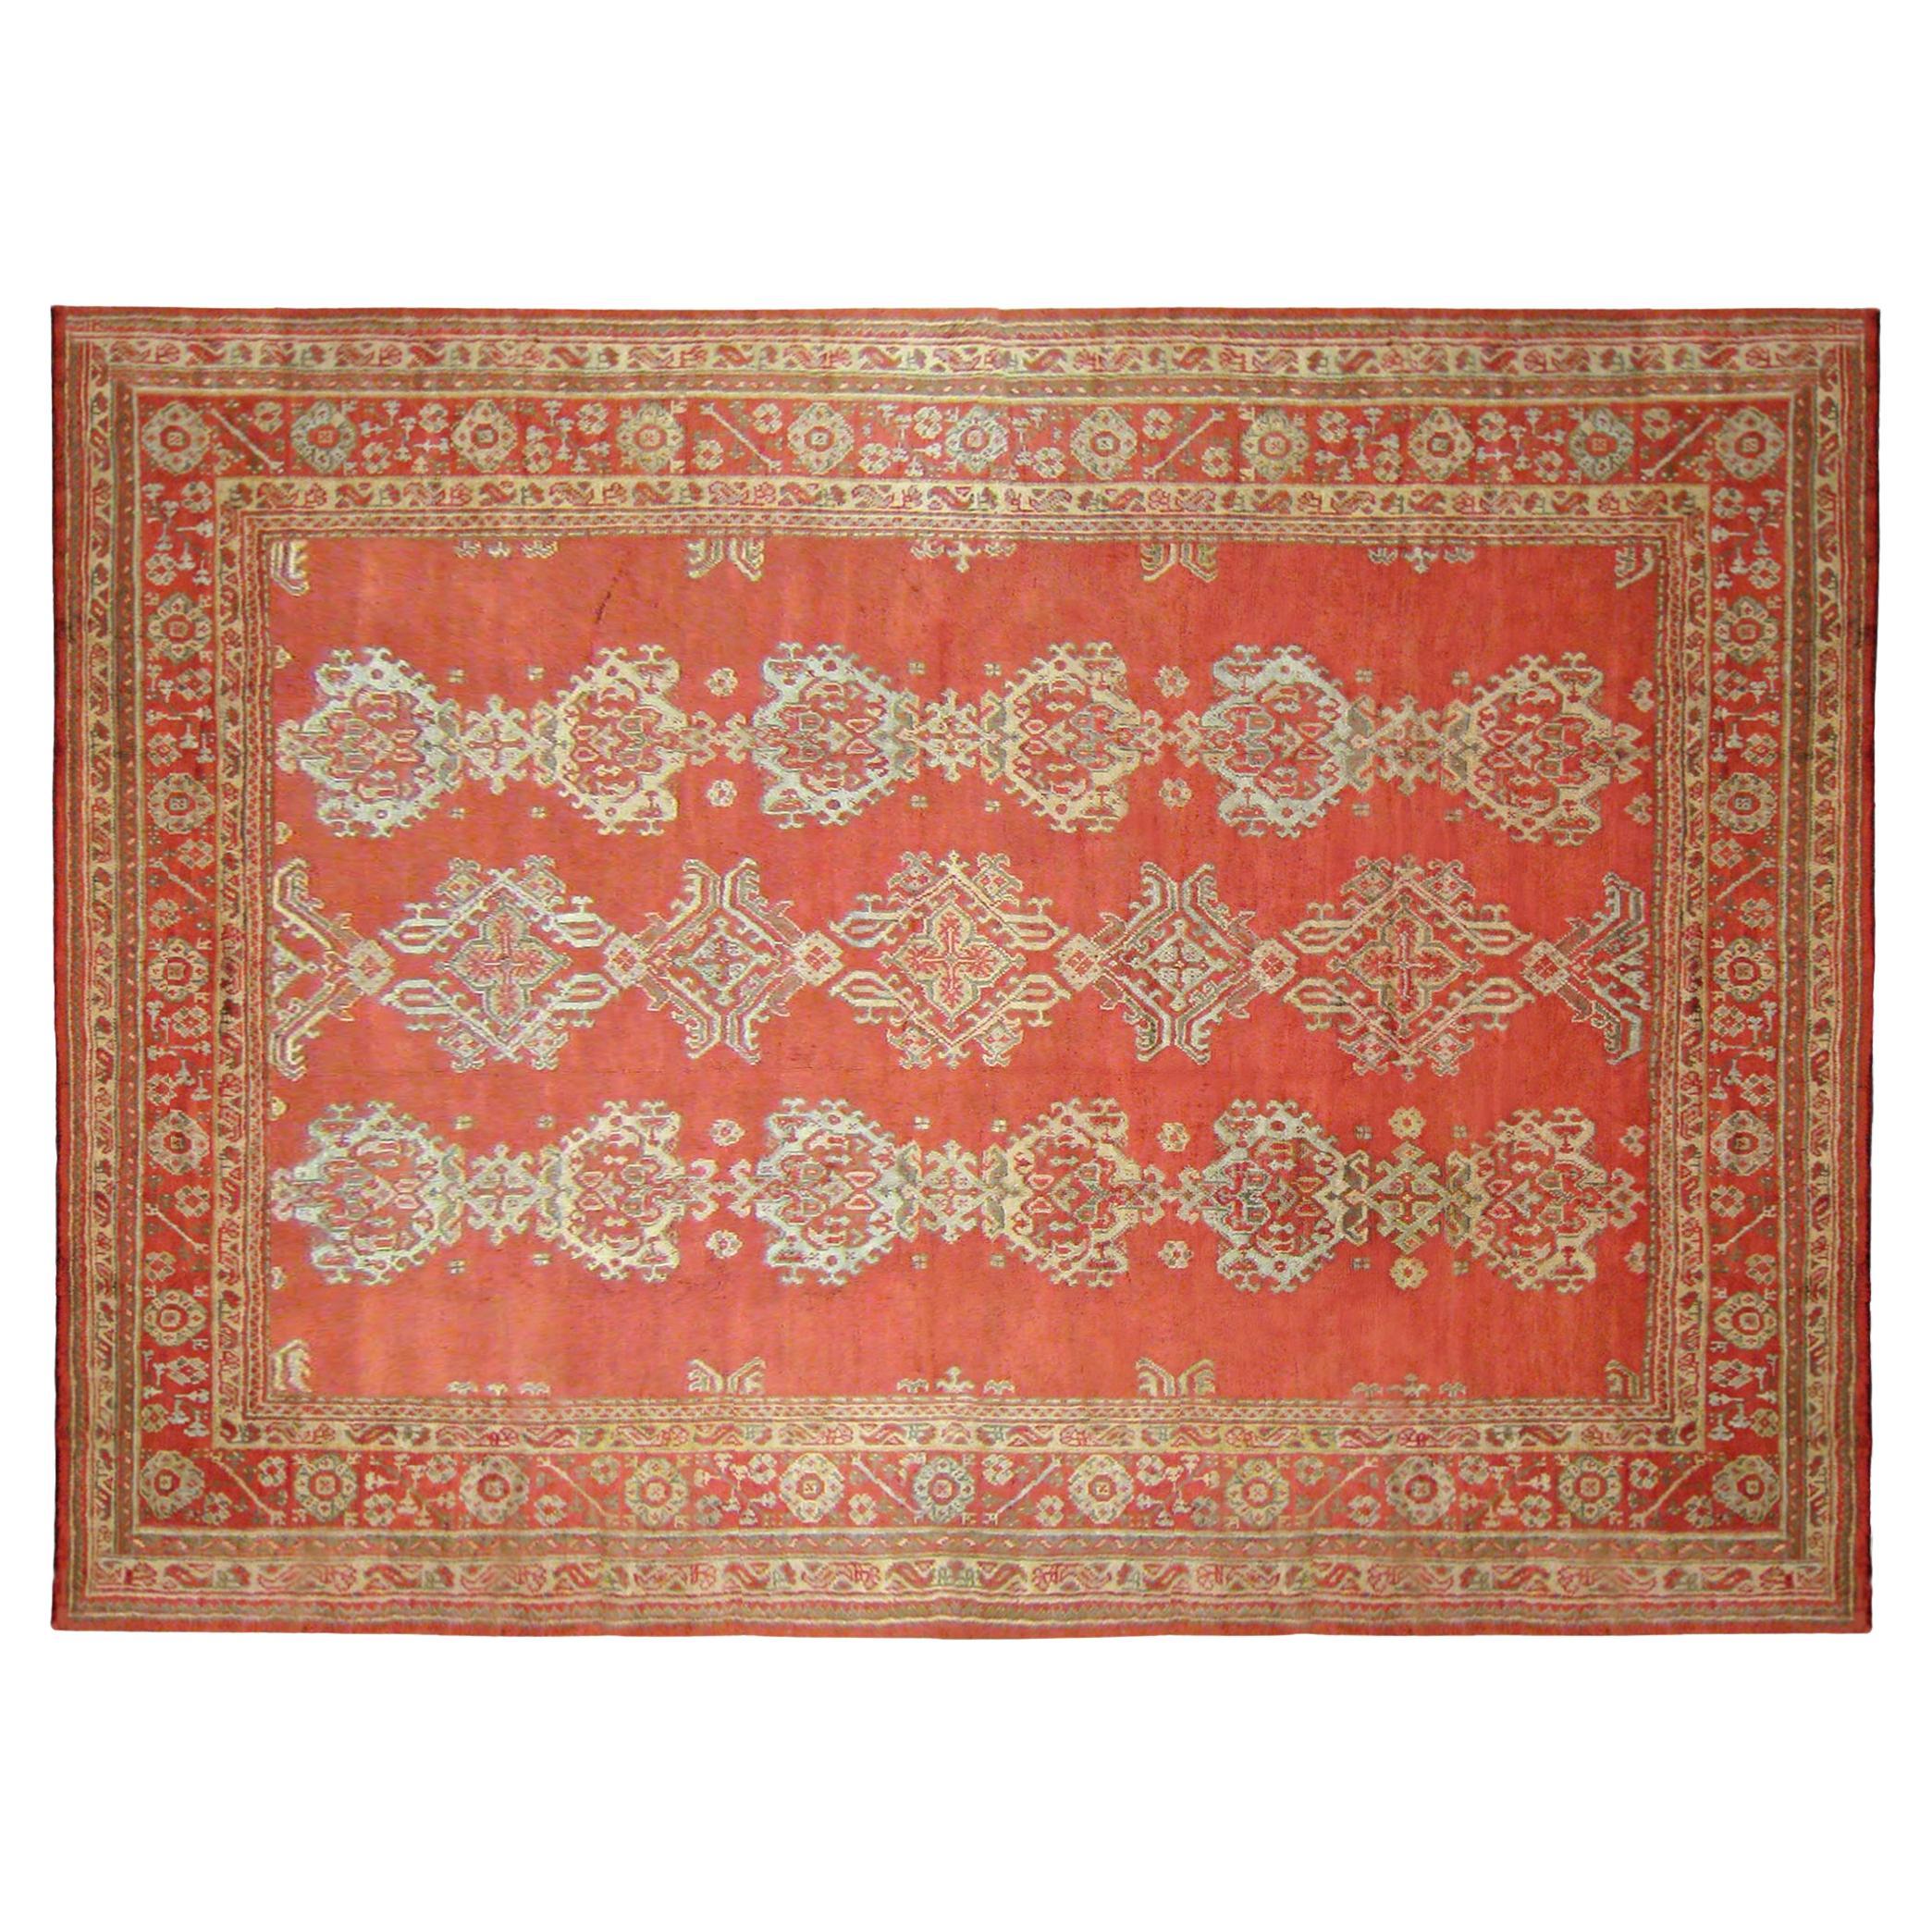 Antique Hand-Knotted Turkish Oushak Oriental Carpet